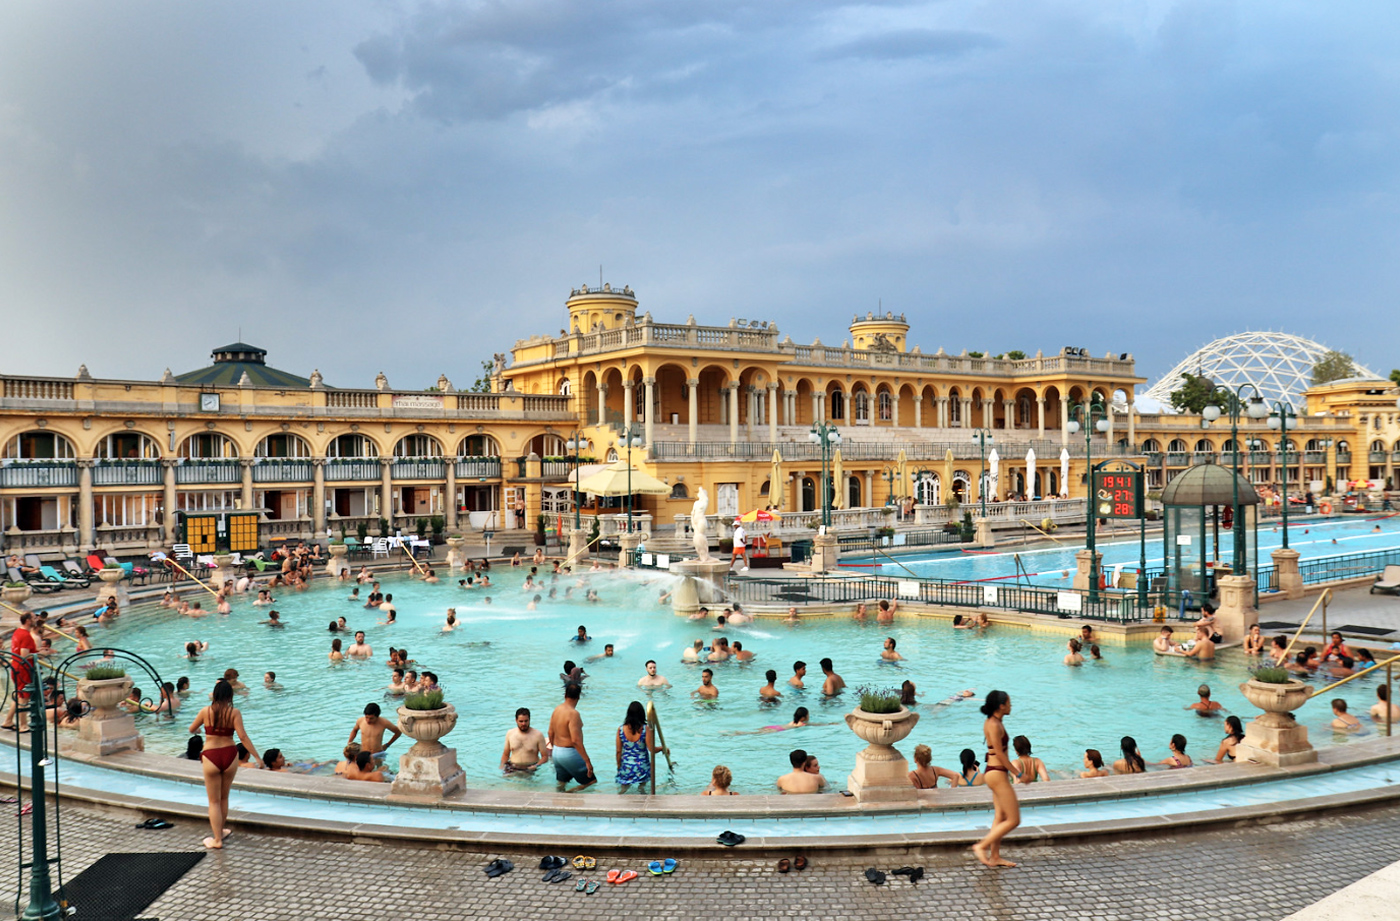 Budapest Thermal Baths (Szechenyi Baths)